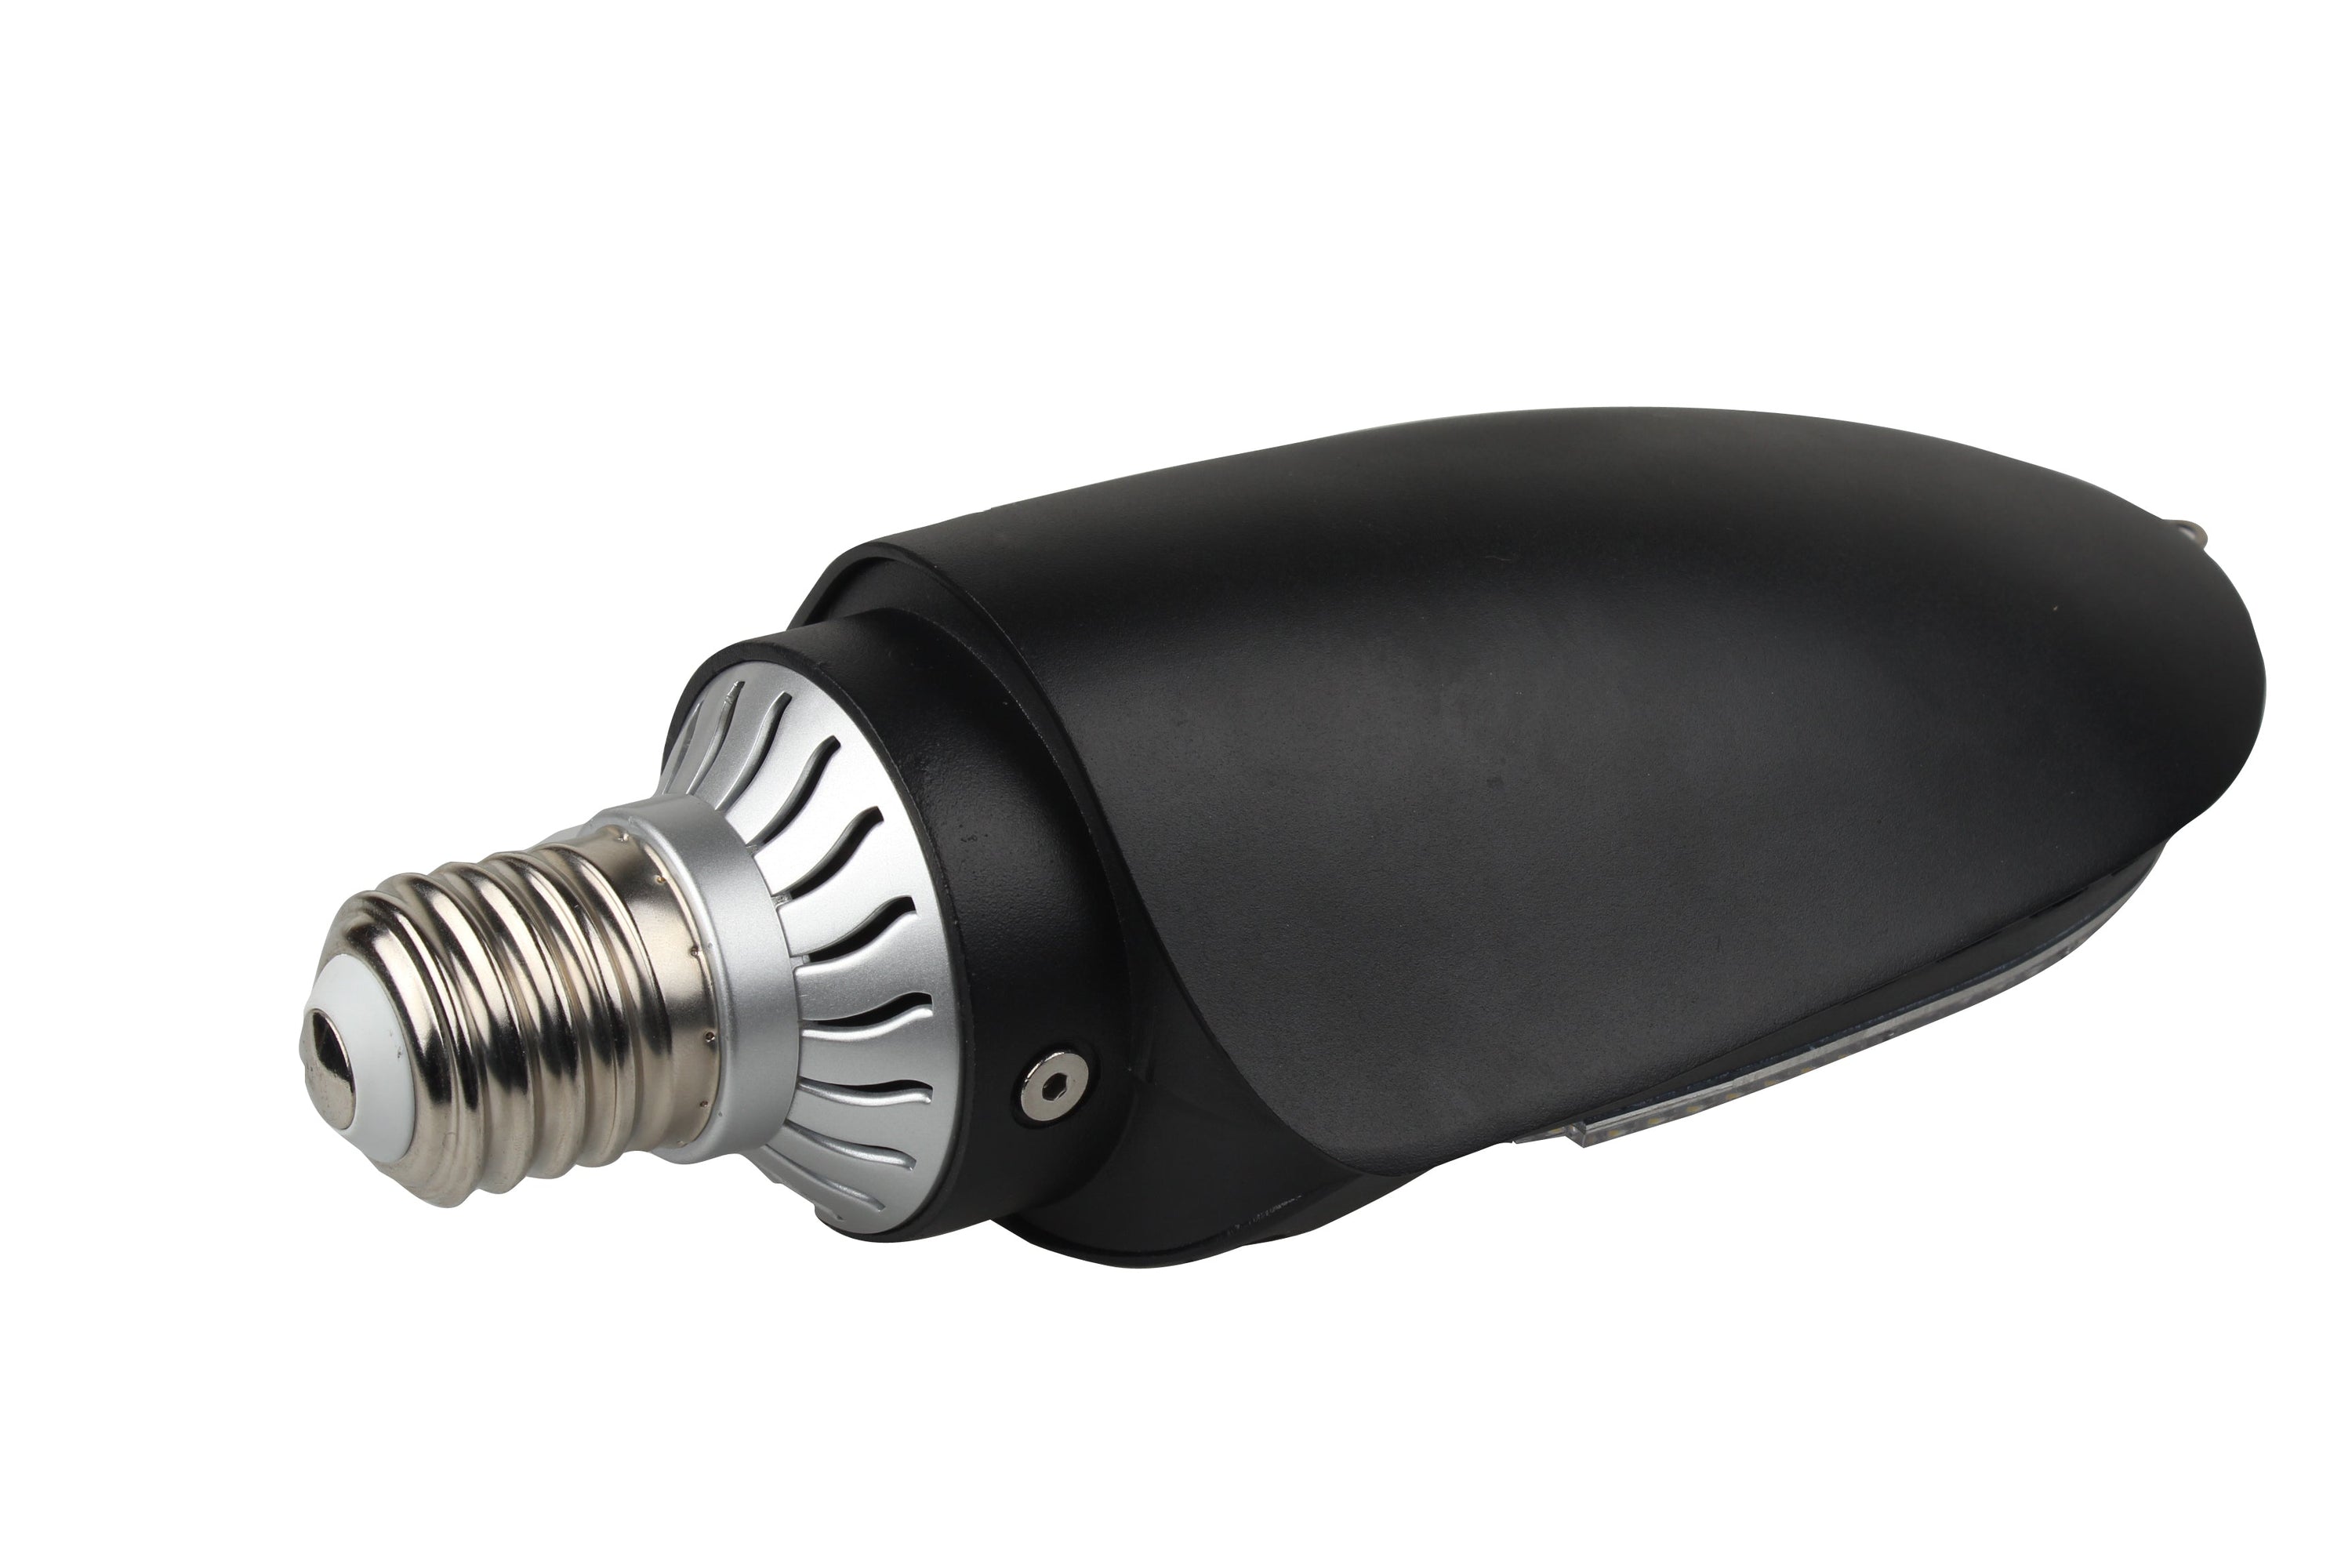 36 Watt LED Paddle Corn Cob Light Bulb - Area Flood Light, Wall Pack Replacement Bulb